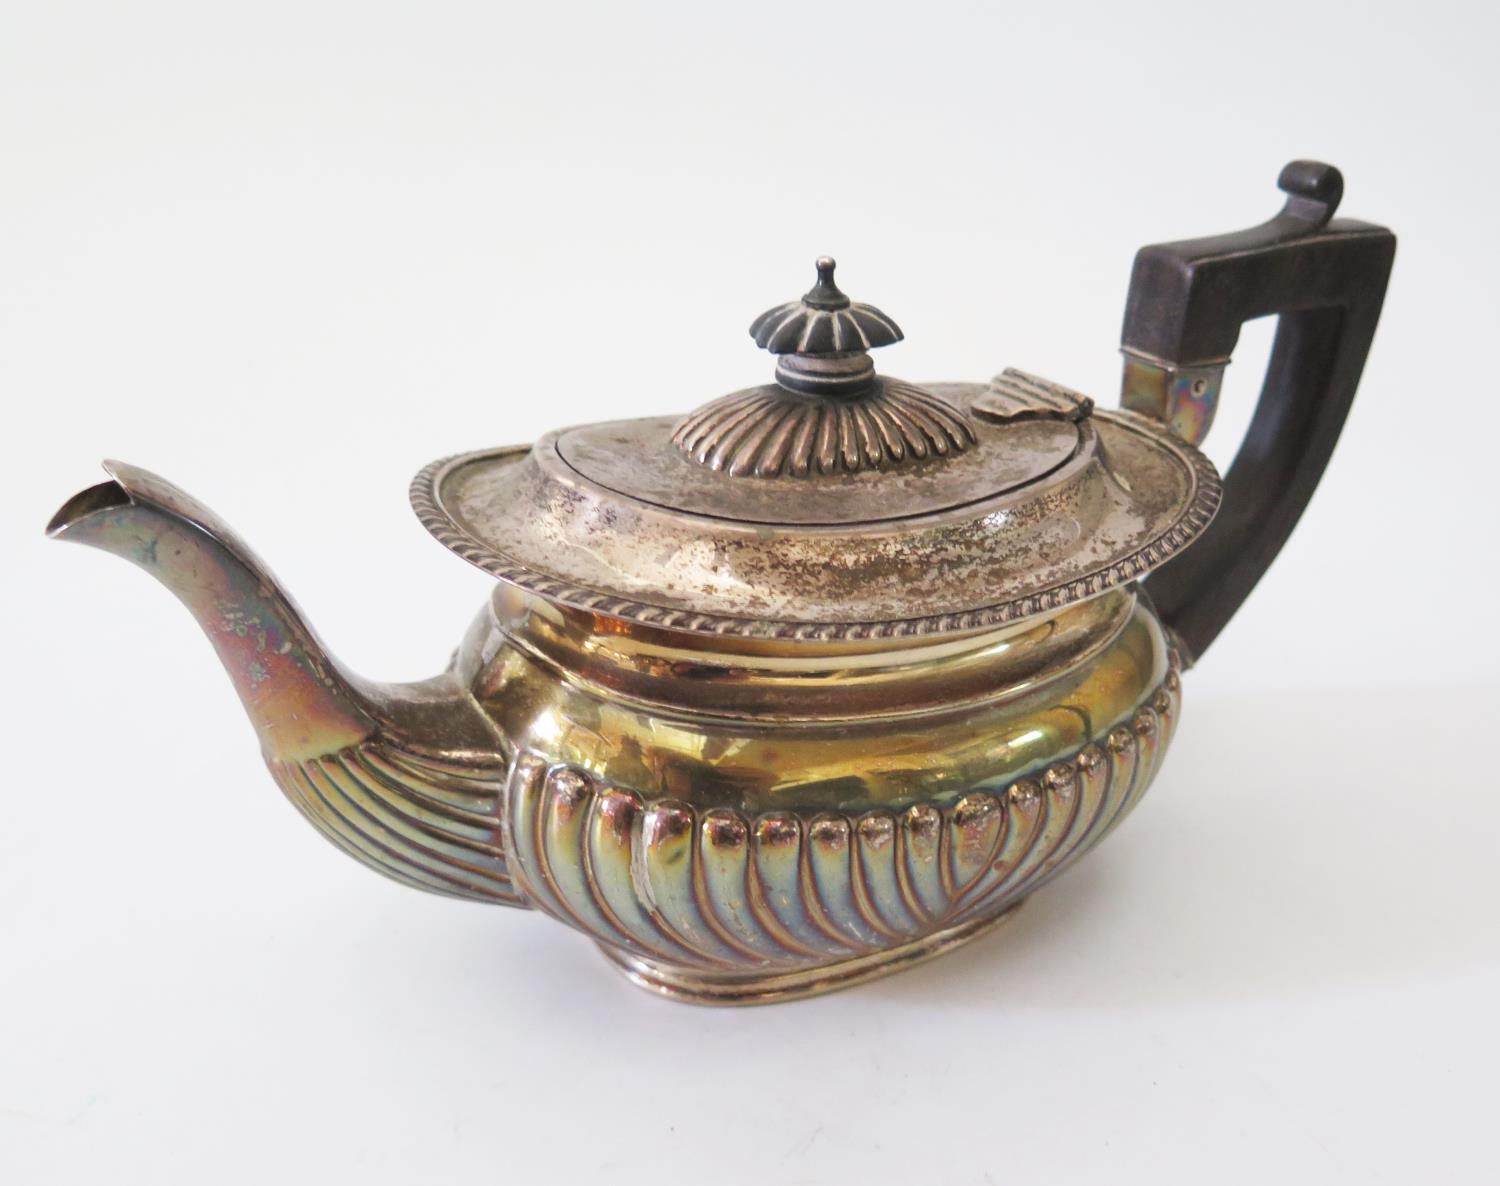 A Victorian Silver Teapot with ebony handle, Birmingham 1898, George Unite, 400g gross